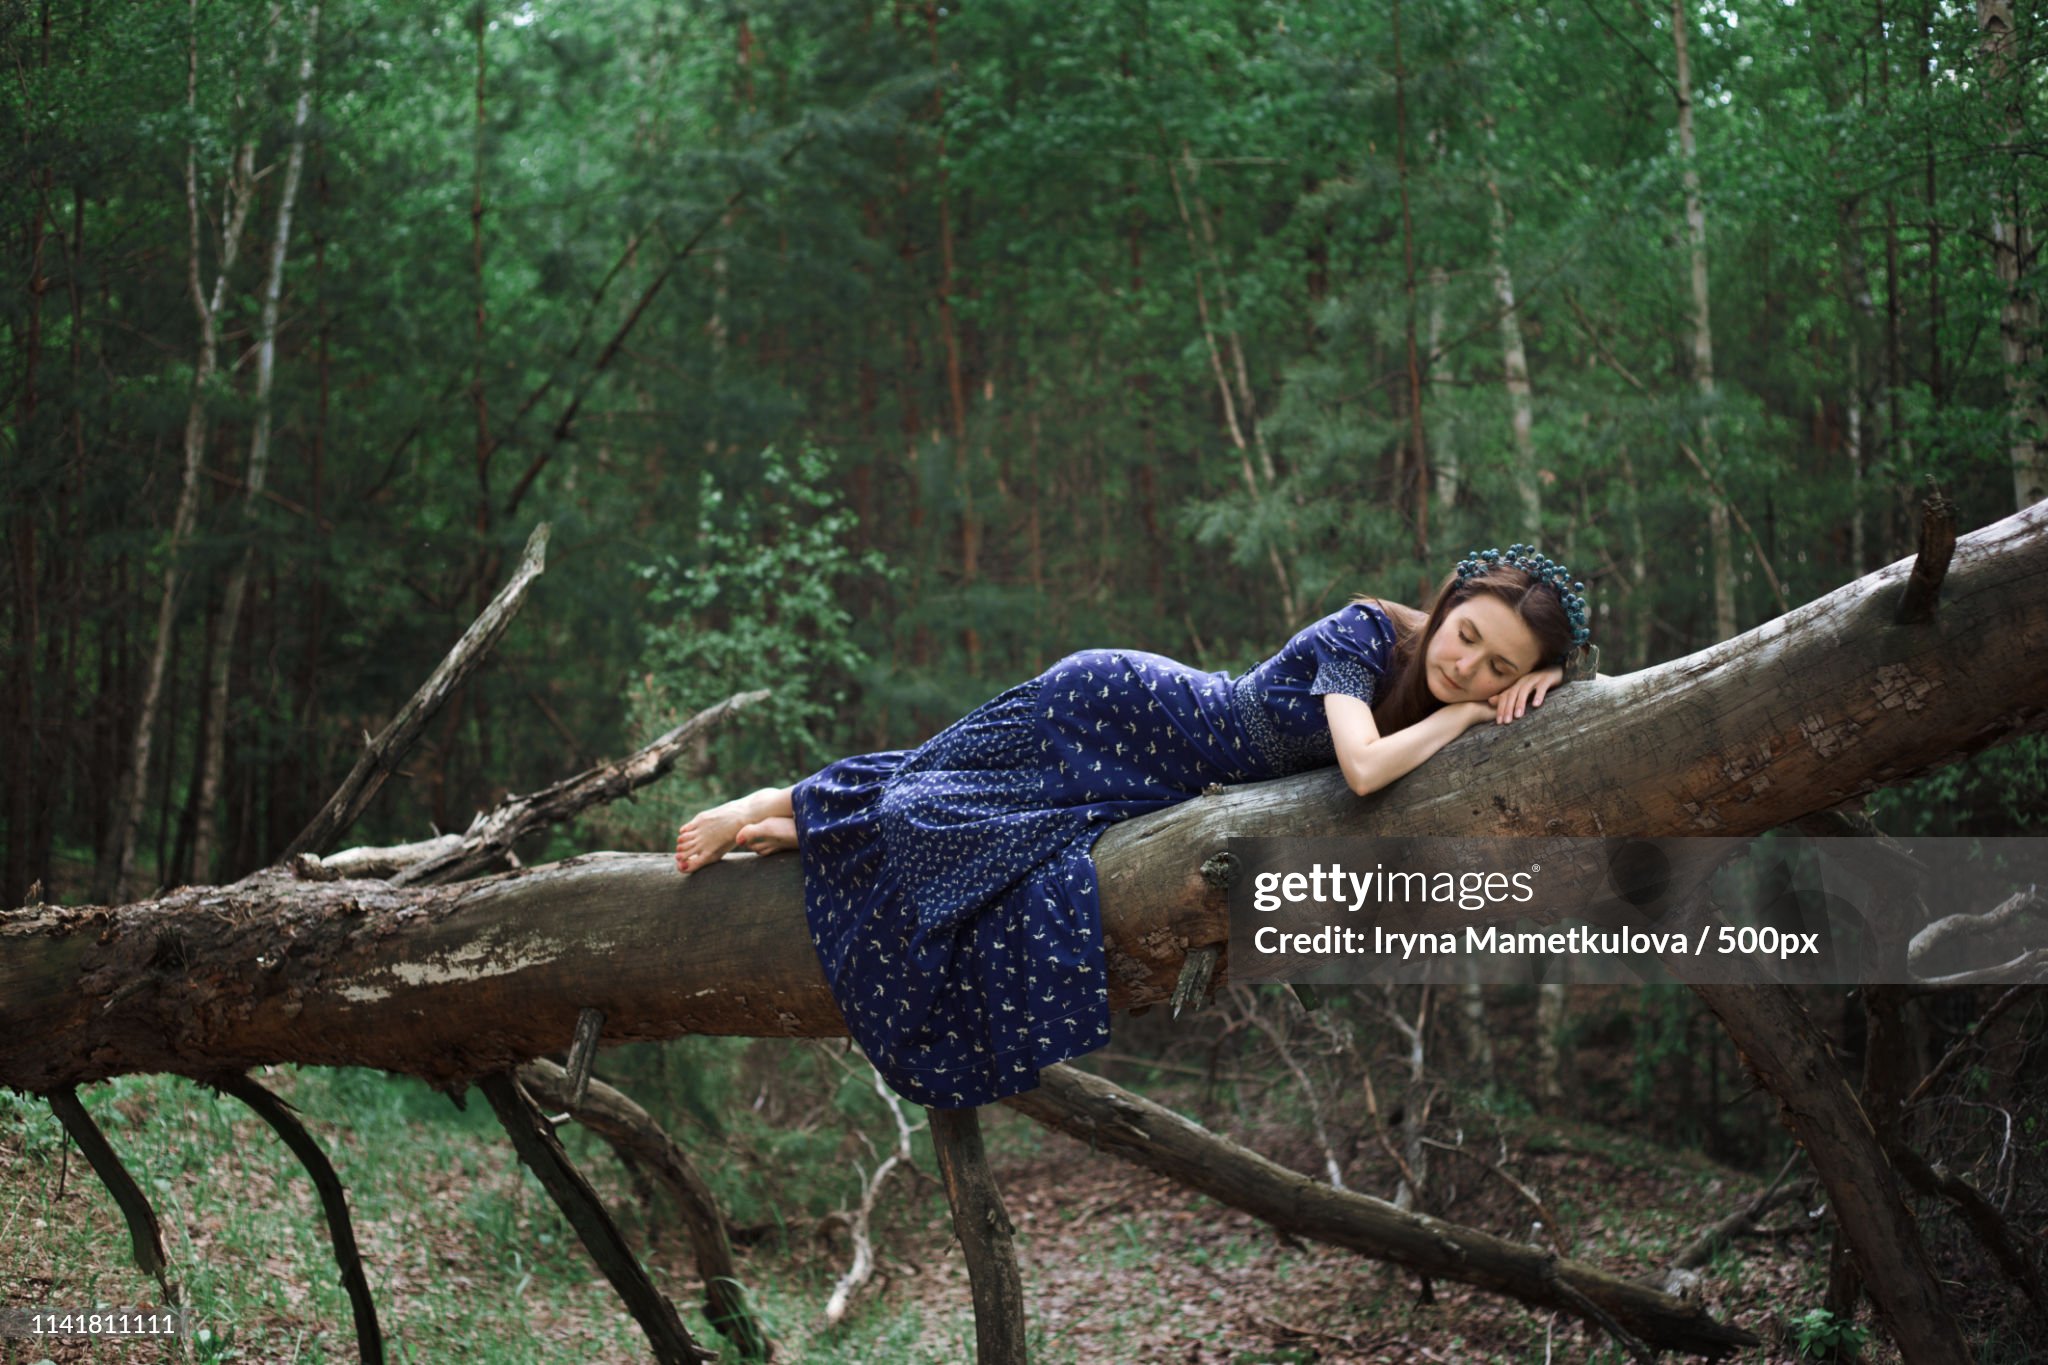 https://media.gettyimages.com/id/1141811111/photo/portrait-of-woman-lying-on-tree.jpg?s=2048x2048&amp;w=gi&amp;k=20&amp;c=cdRC7Z40rvVIhfLmRcbSqG8HrDYjrf7XnyPubkBj5Aw=